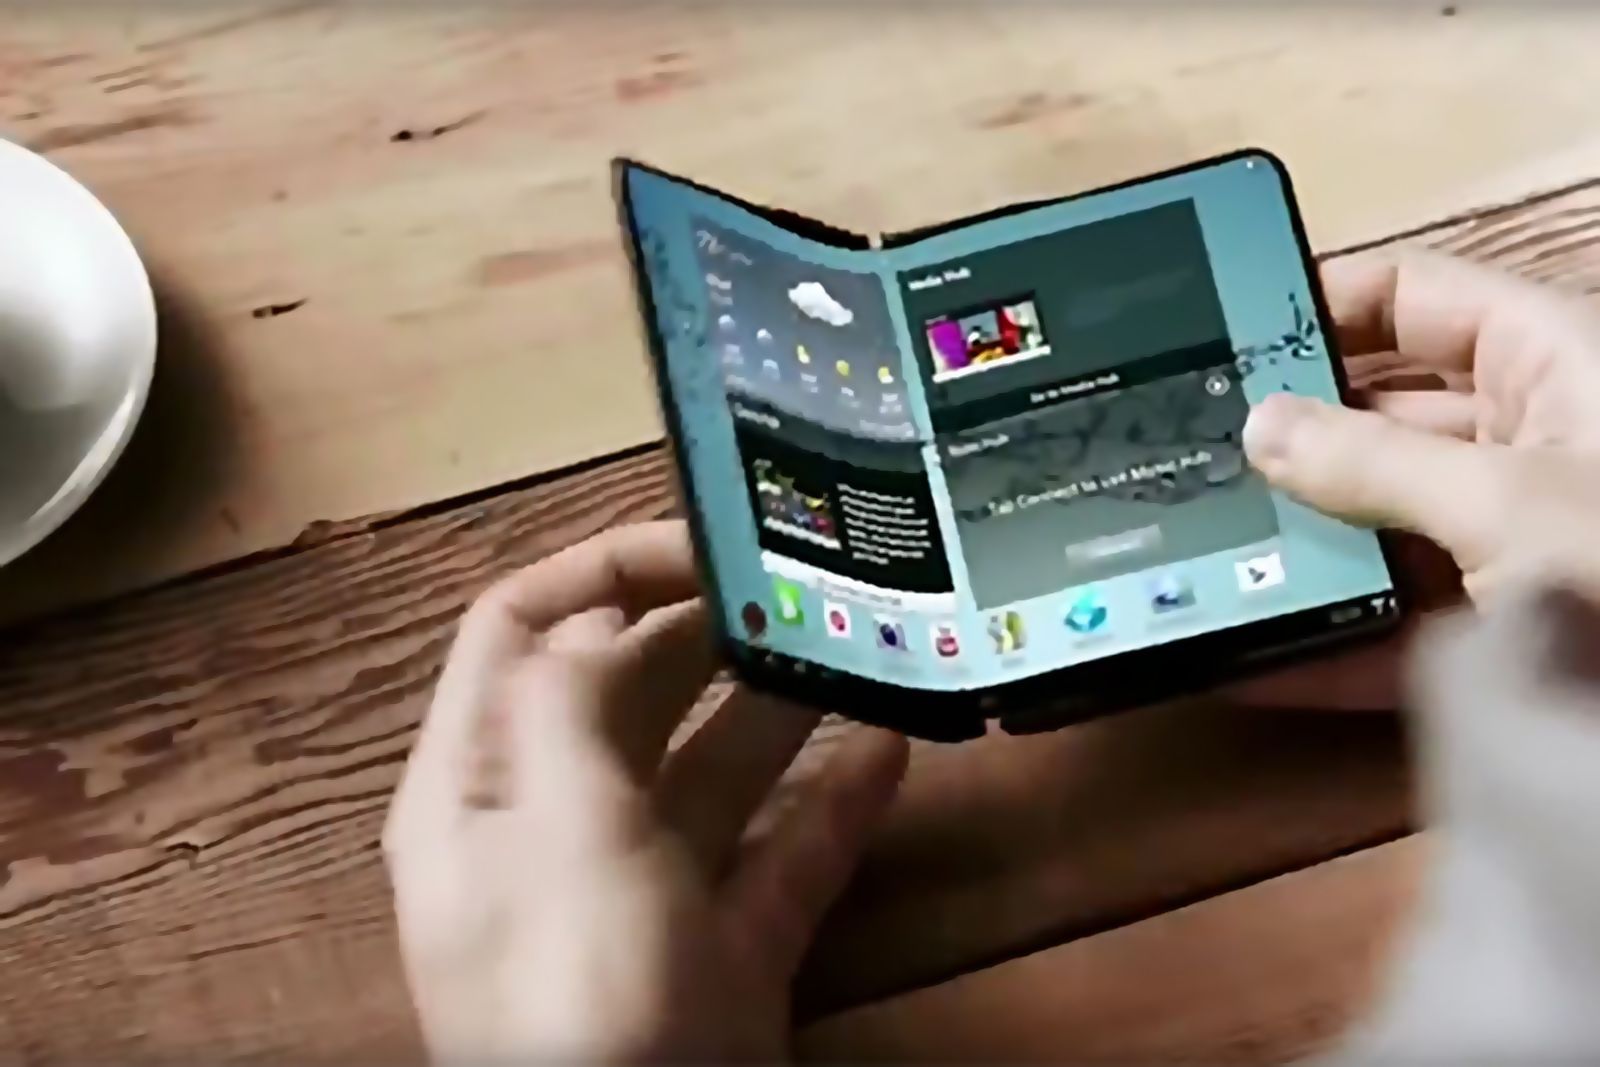 Galaxy X coming soon Samsung says itll use foldable OLED displays image 1